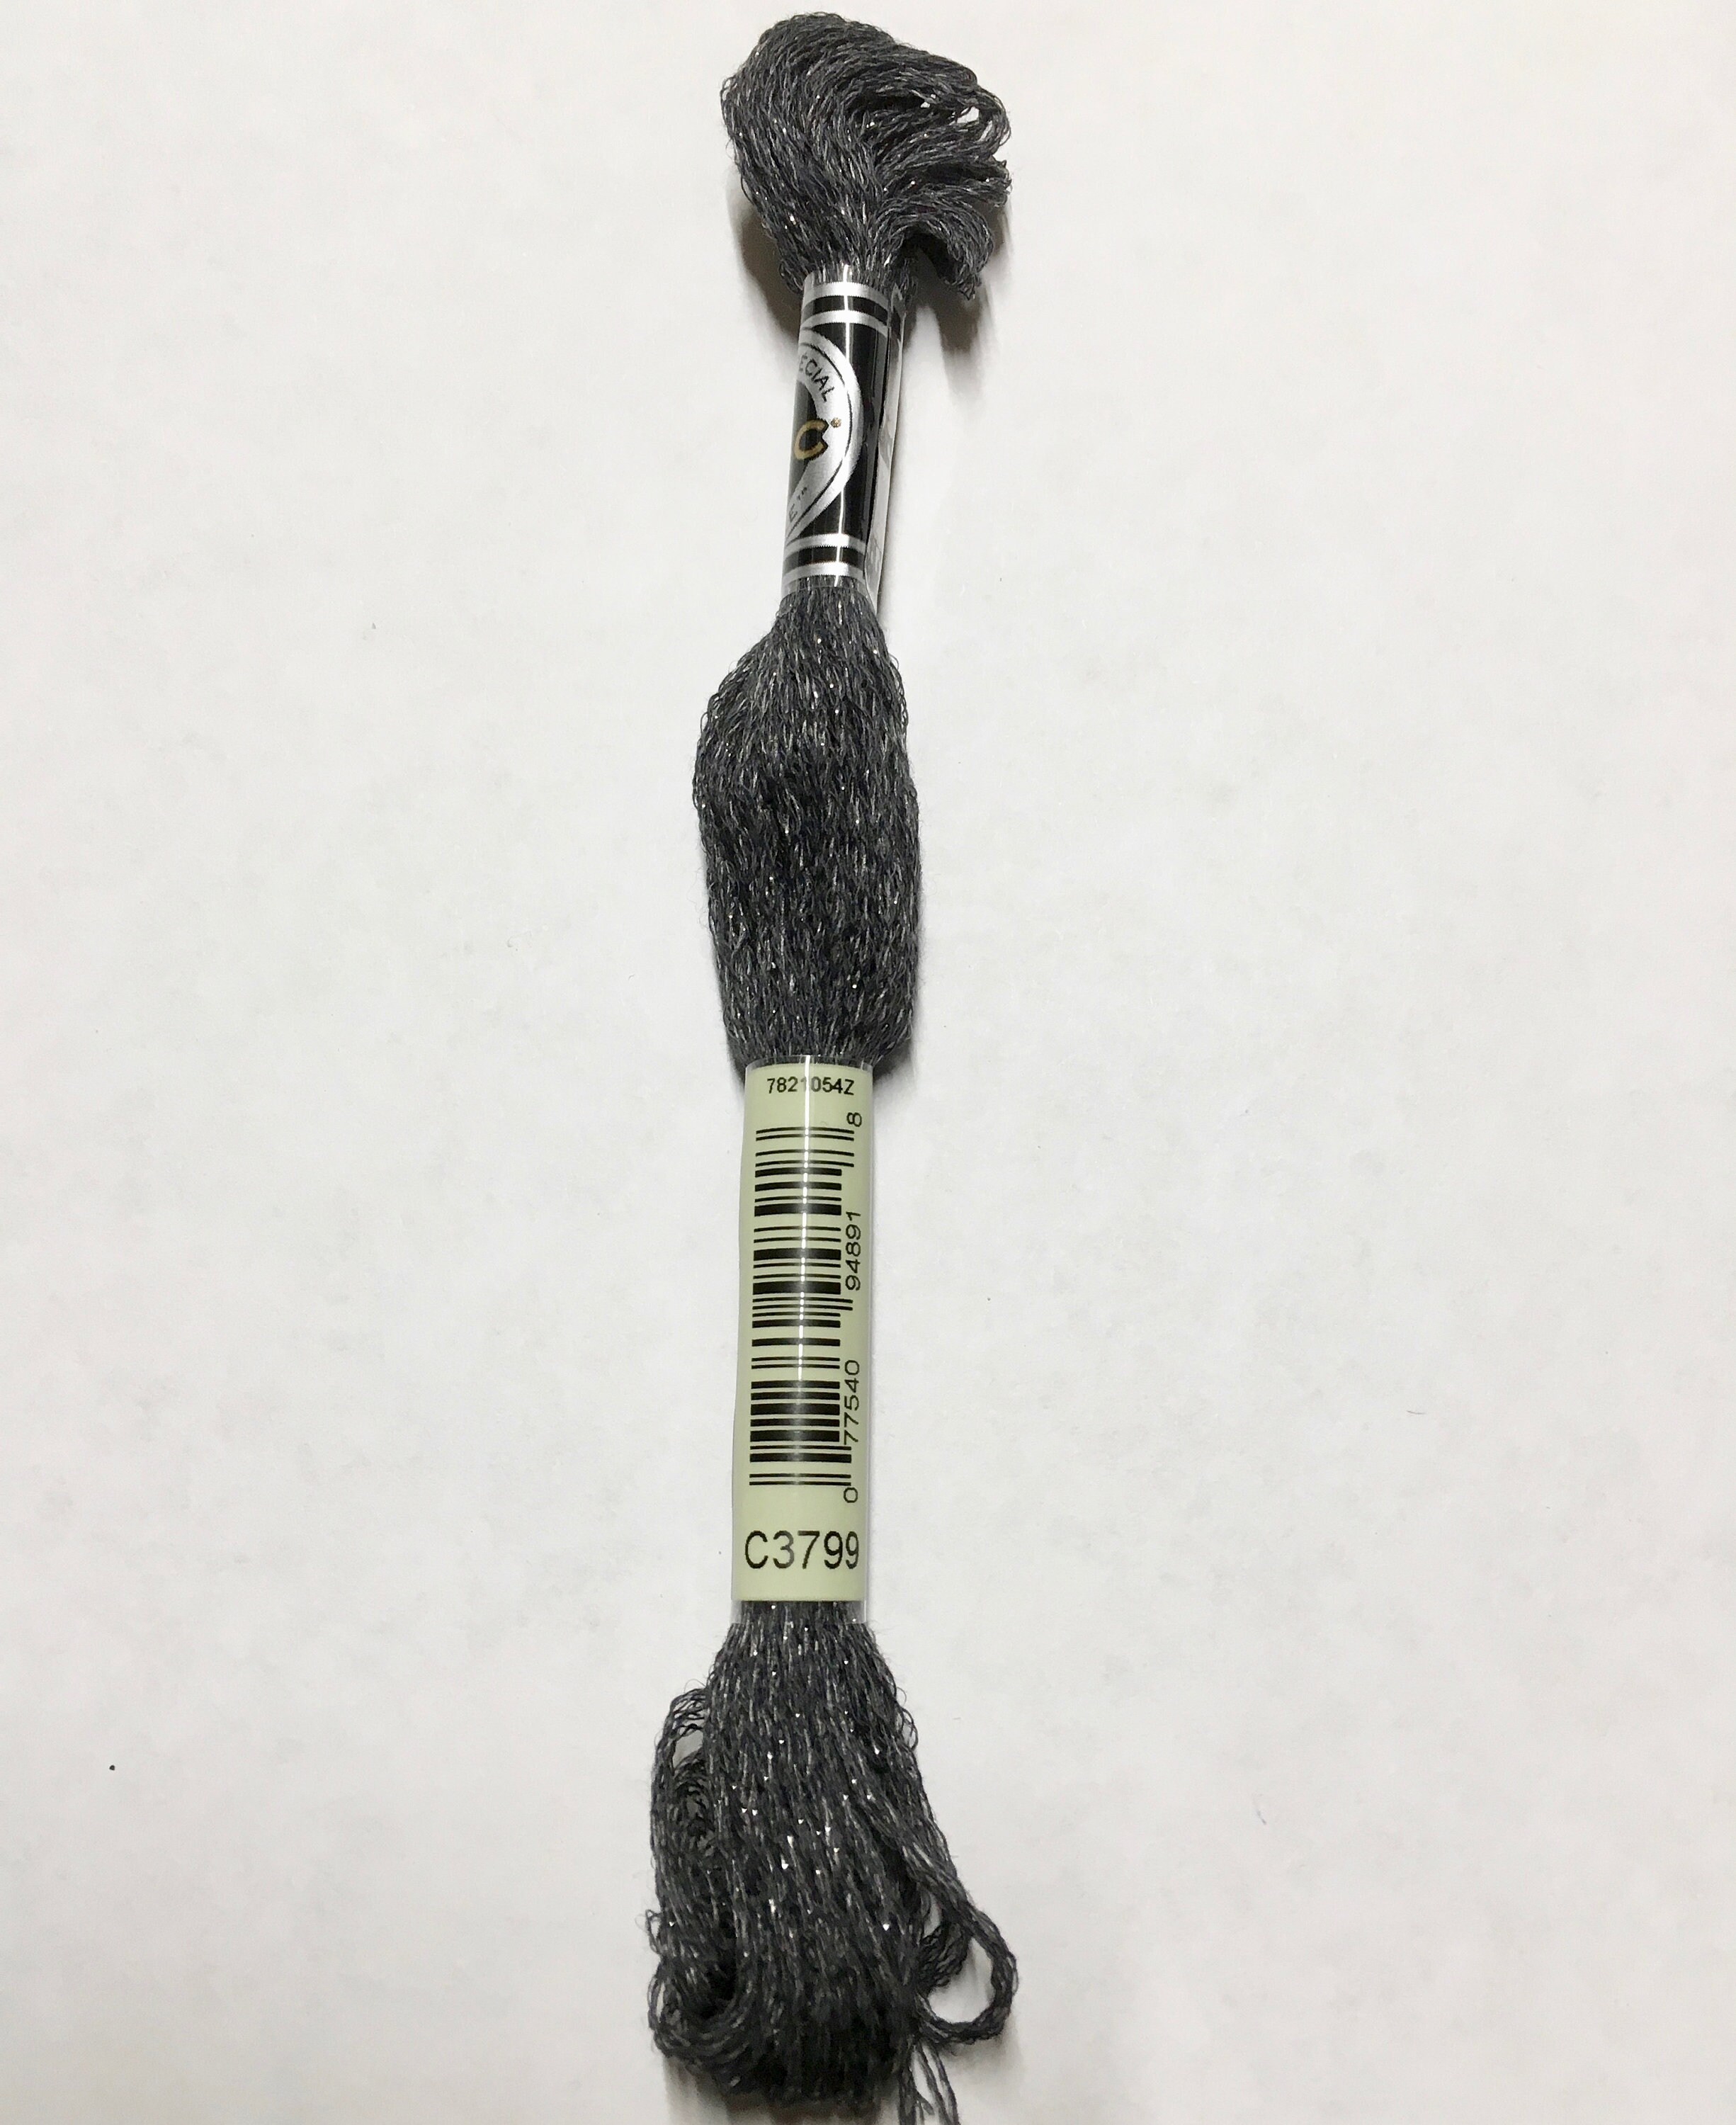 CXC 3799 Dark Grey Black Embroidery Thread by Metre, Cut 1-metre Lengths,  40x1 Metre Bundle, Cross Stitch Floss Full Cone, Colour Match DMC 